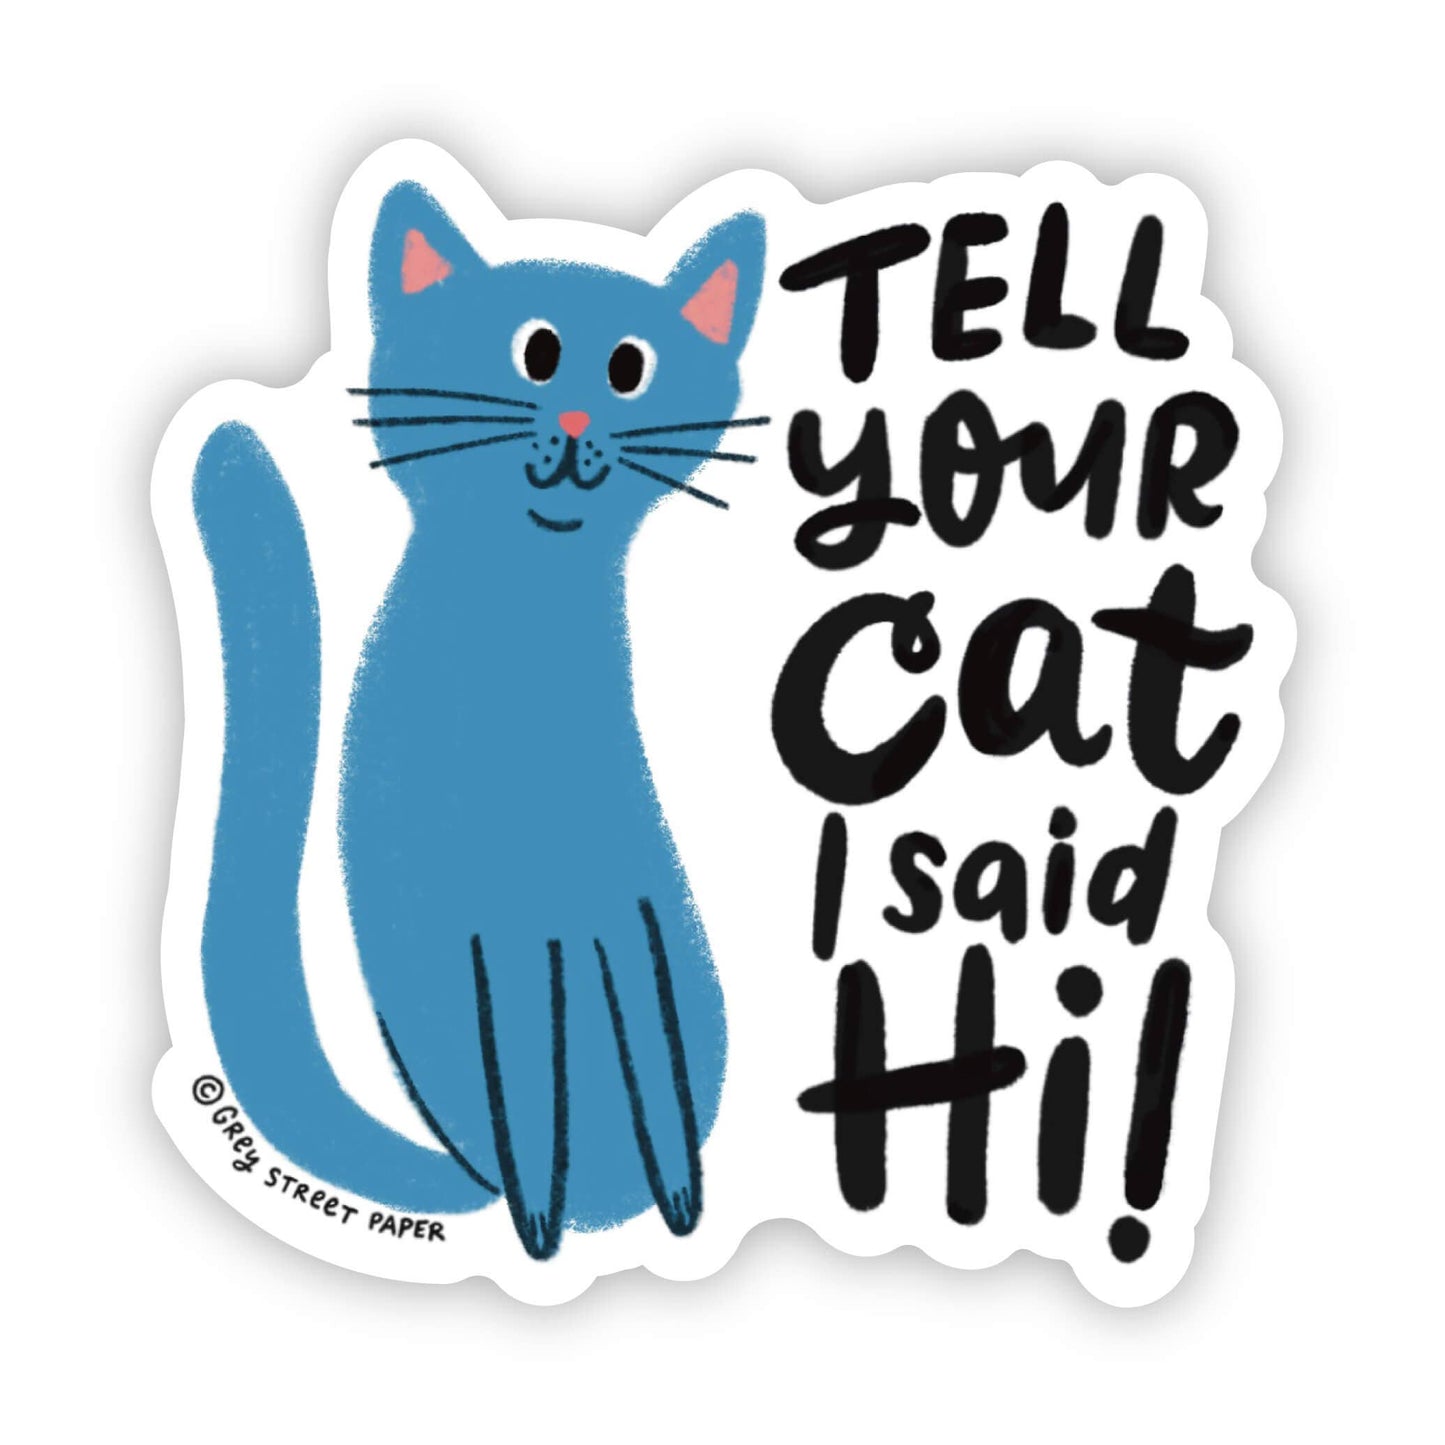 Tell Your Cat I Said Hi Sticker | Grey Street Paper